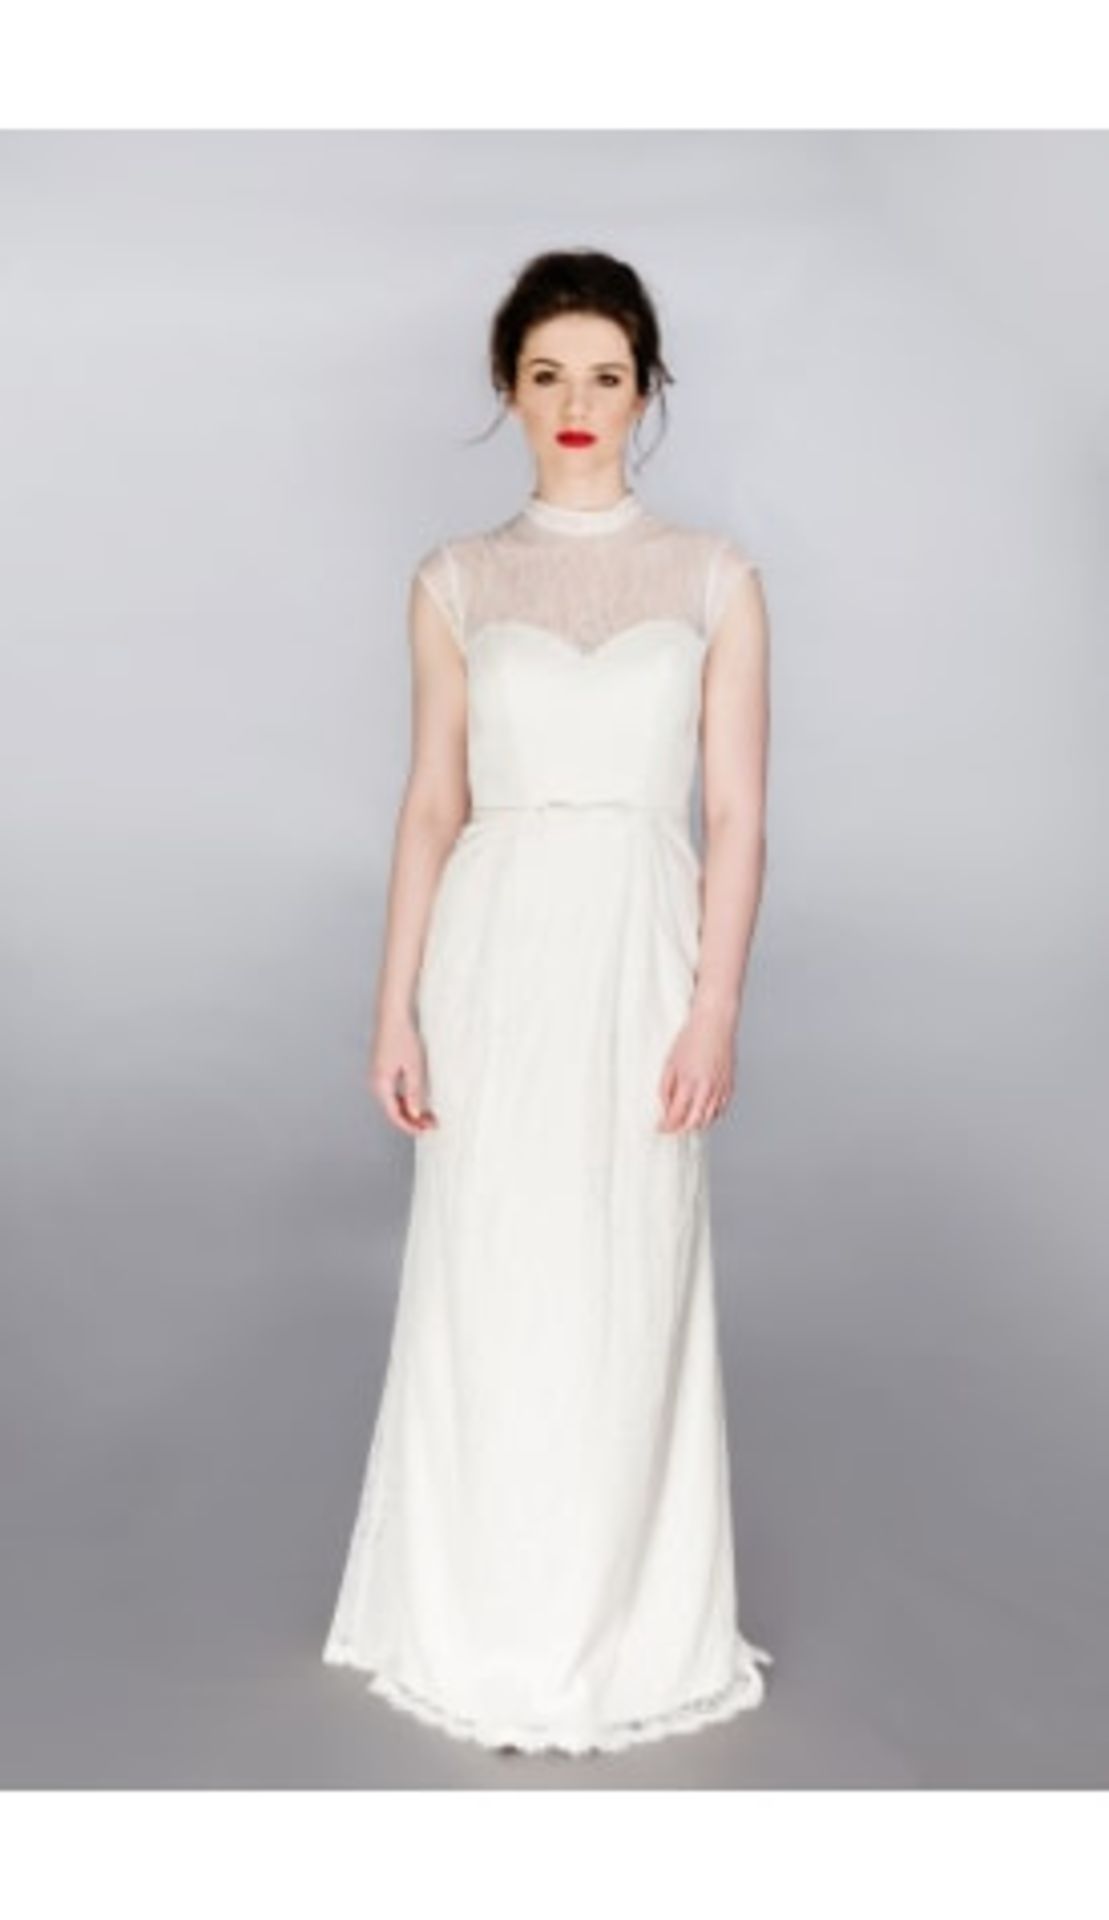 No VAT!! RRP CIRCA £800! Vintage Inspired Designer Wedding Dress in Ivory size 10. Brand New